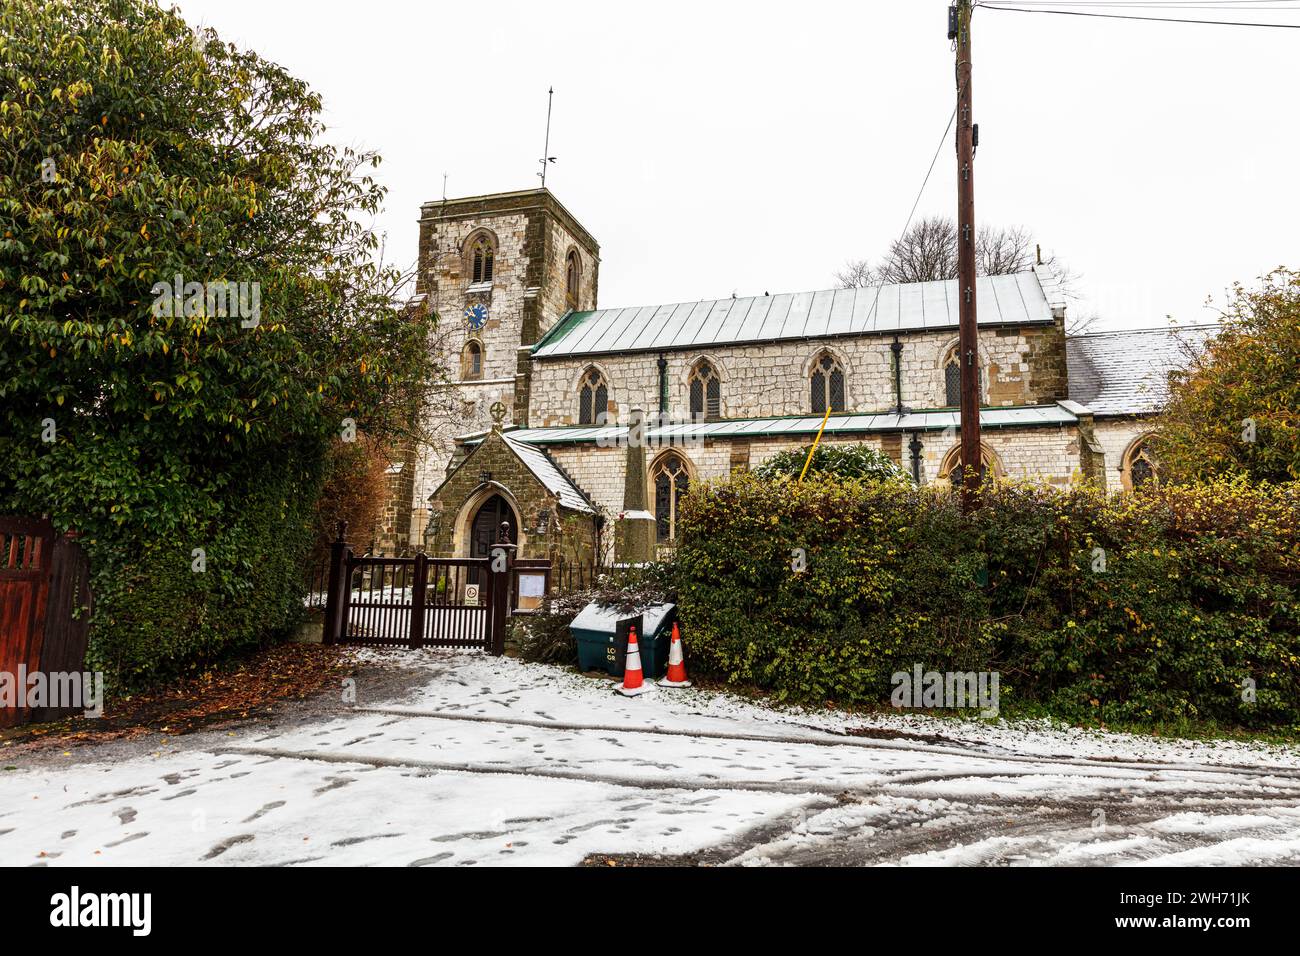 All saints church, Legbourne, Louth, Lincolnshire, UK, England, All Saints Church Legbourne UK, church, churches, snow, winter, church in snow, Stock Photo